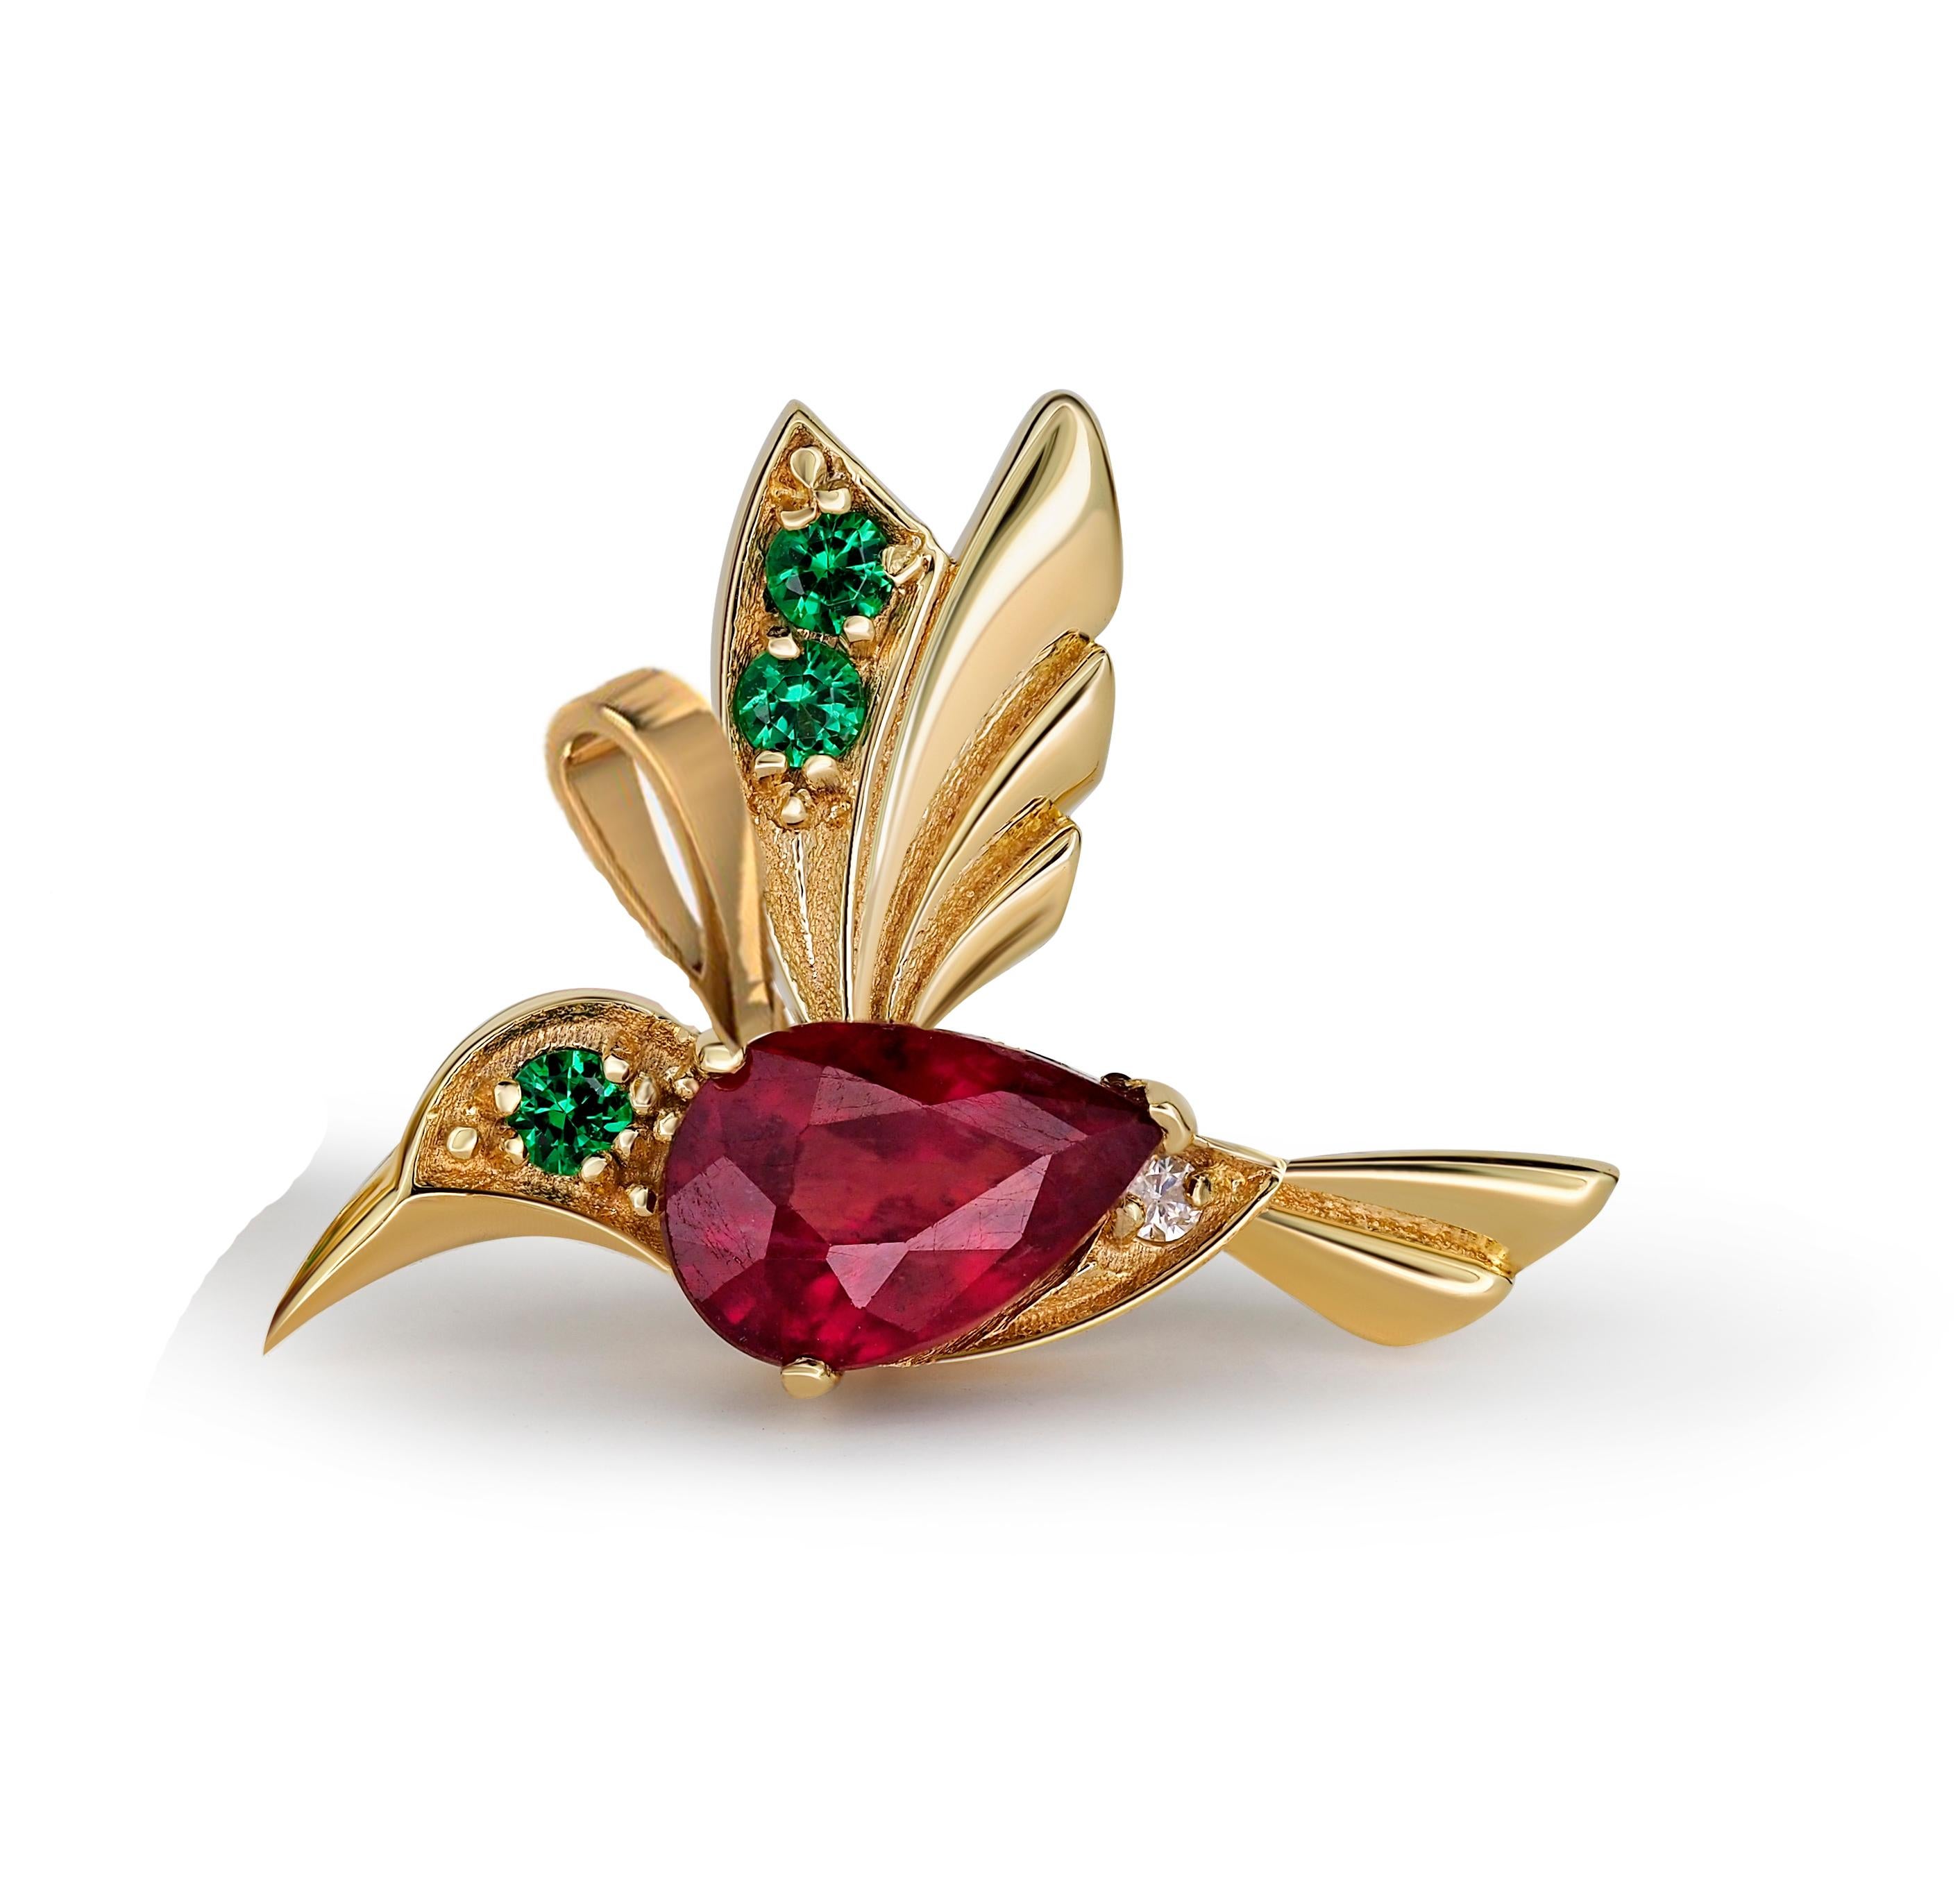 Modern 14k Gold Hummingbird Pendant with Rubies, Bird Pendant with Colored Gemstones